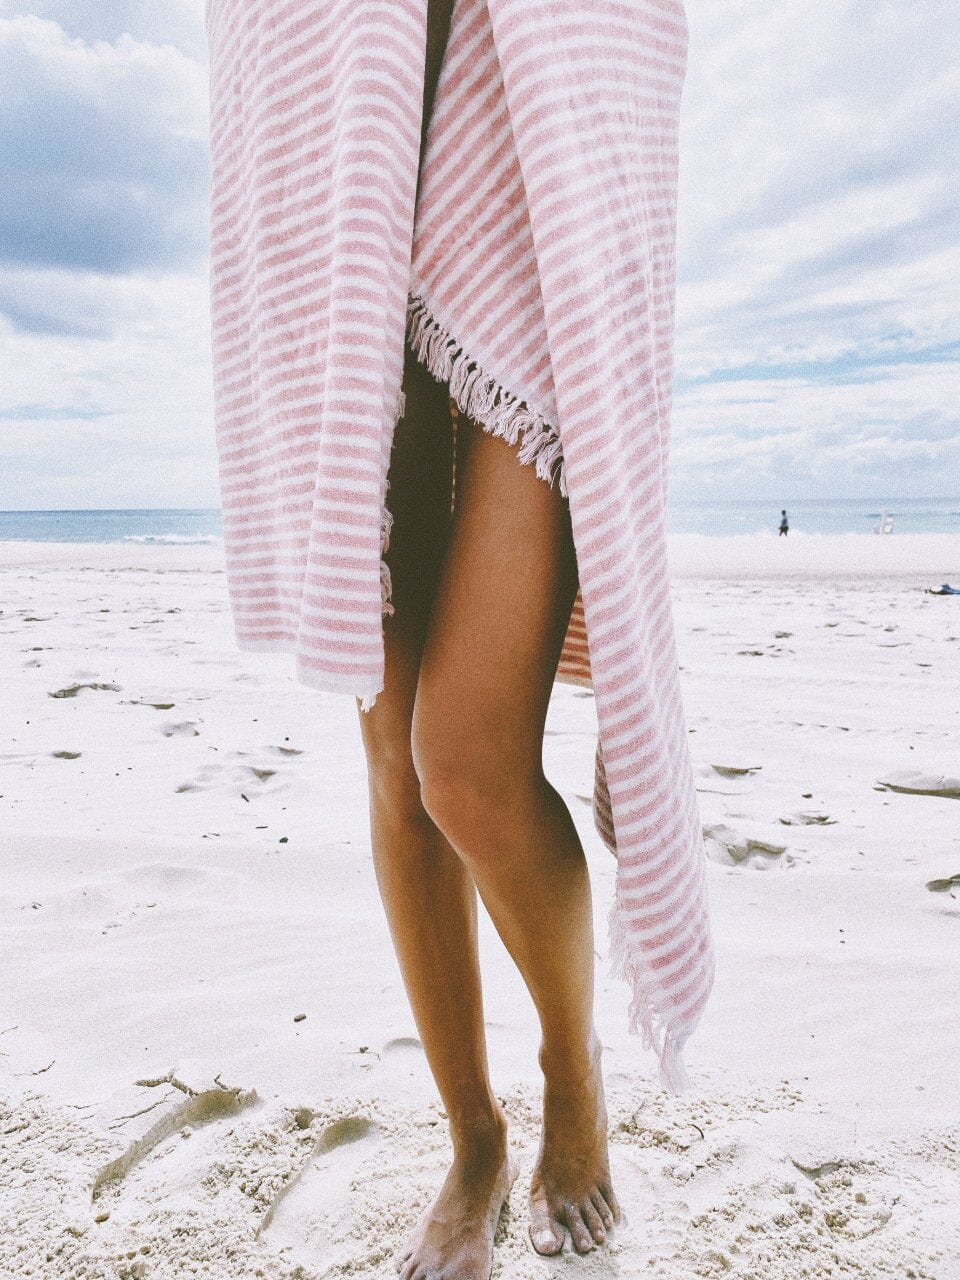 The Beach Towel - Lauren's Pink Stripe Beach Towel Business & Pleasure Co 